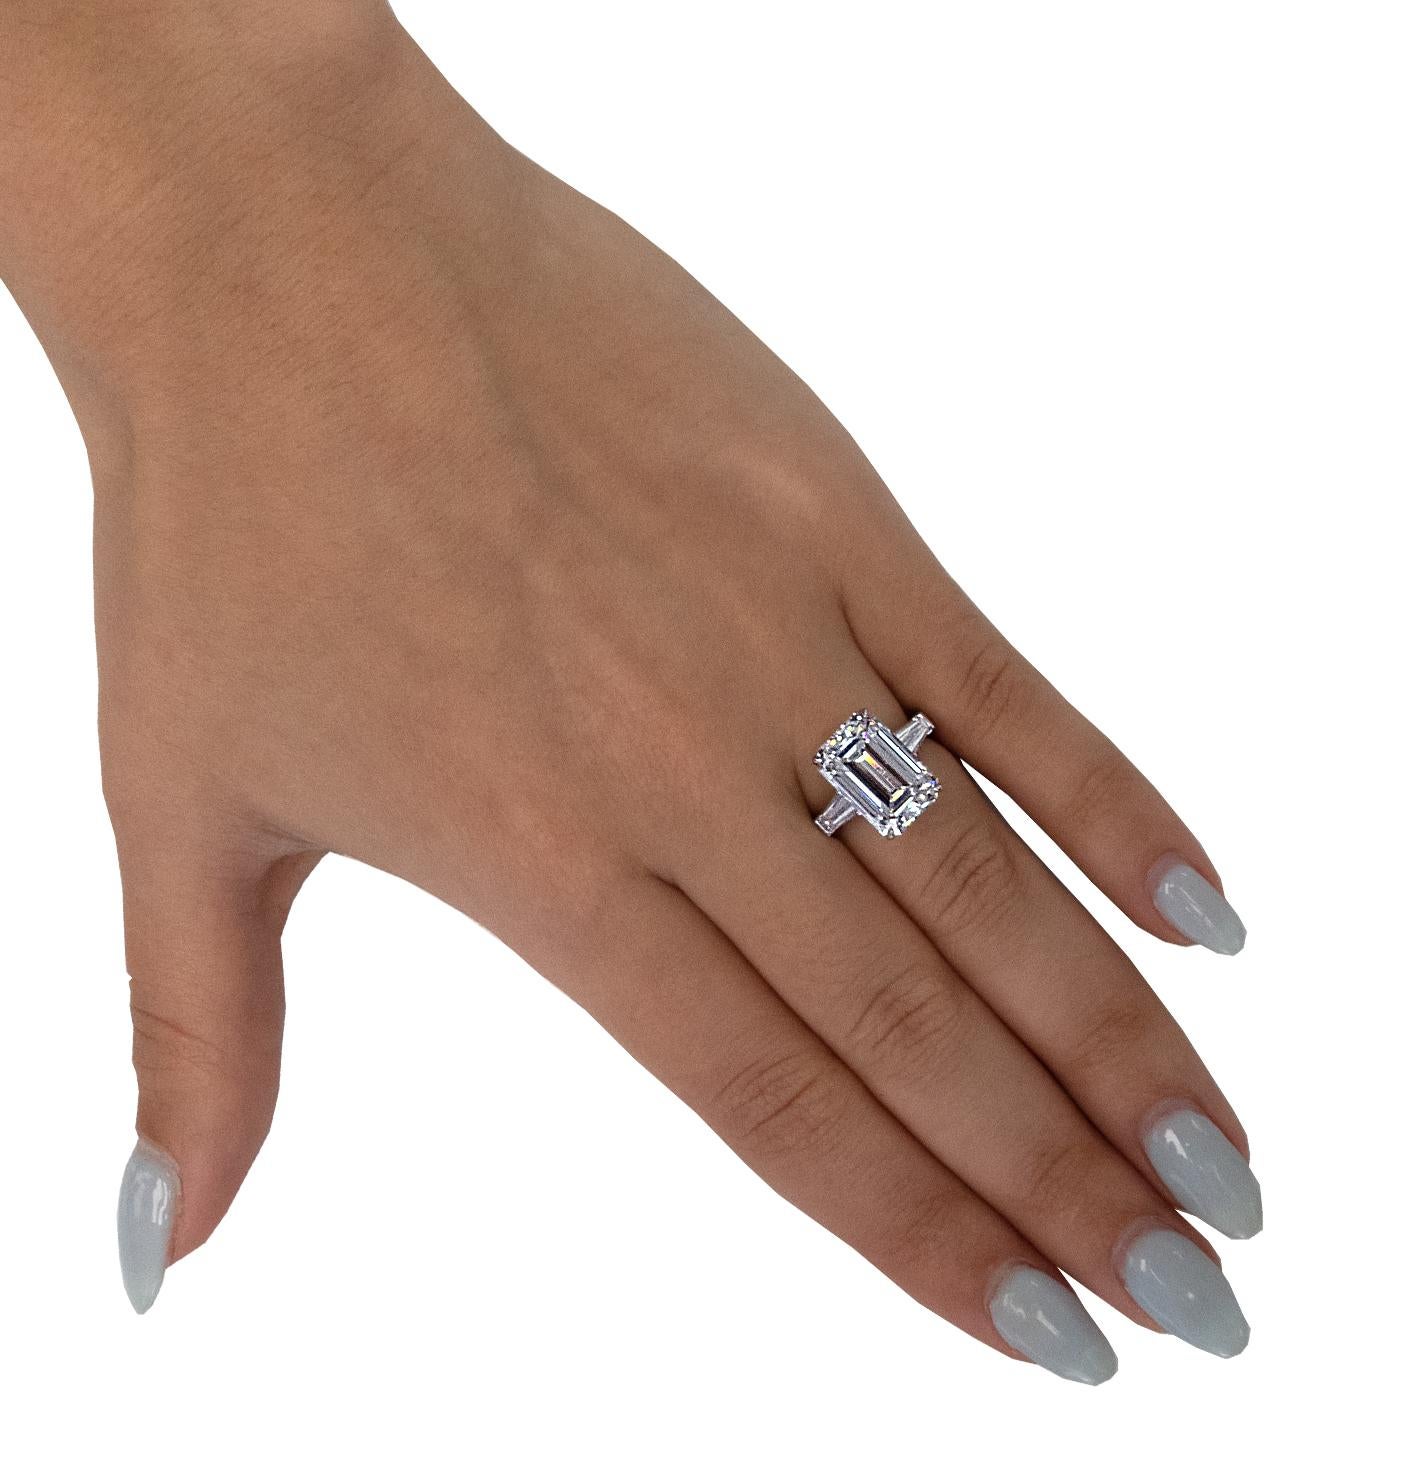 7.5 carat diamond ring